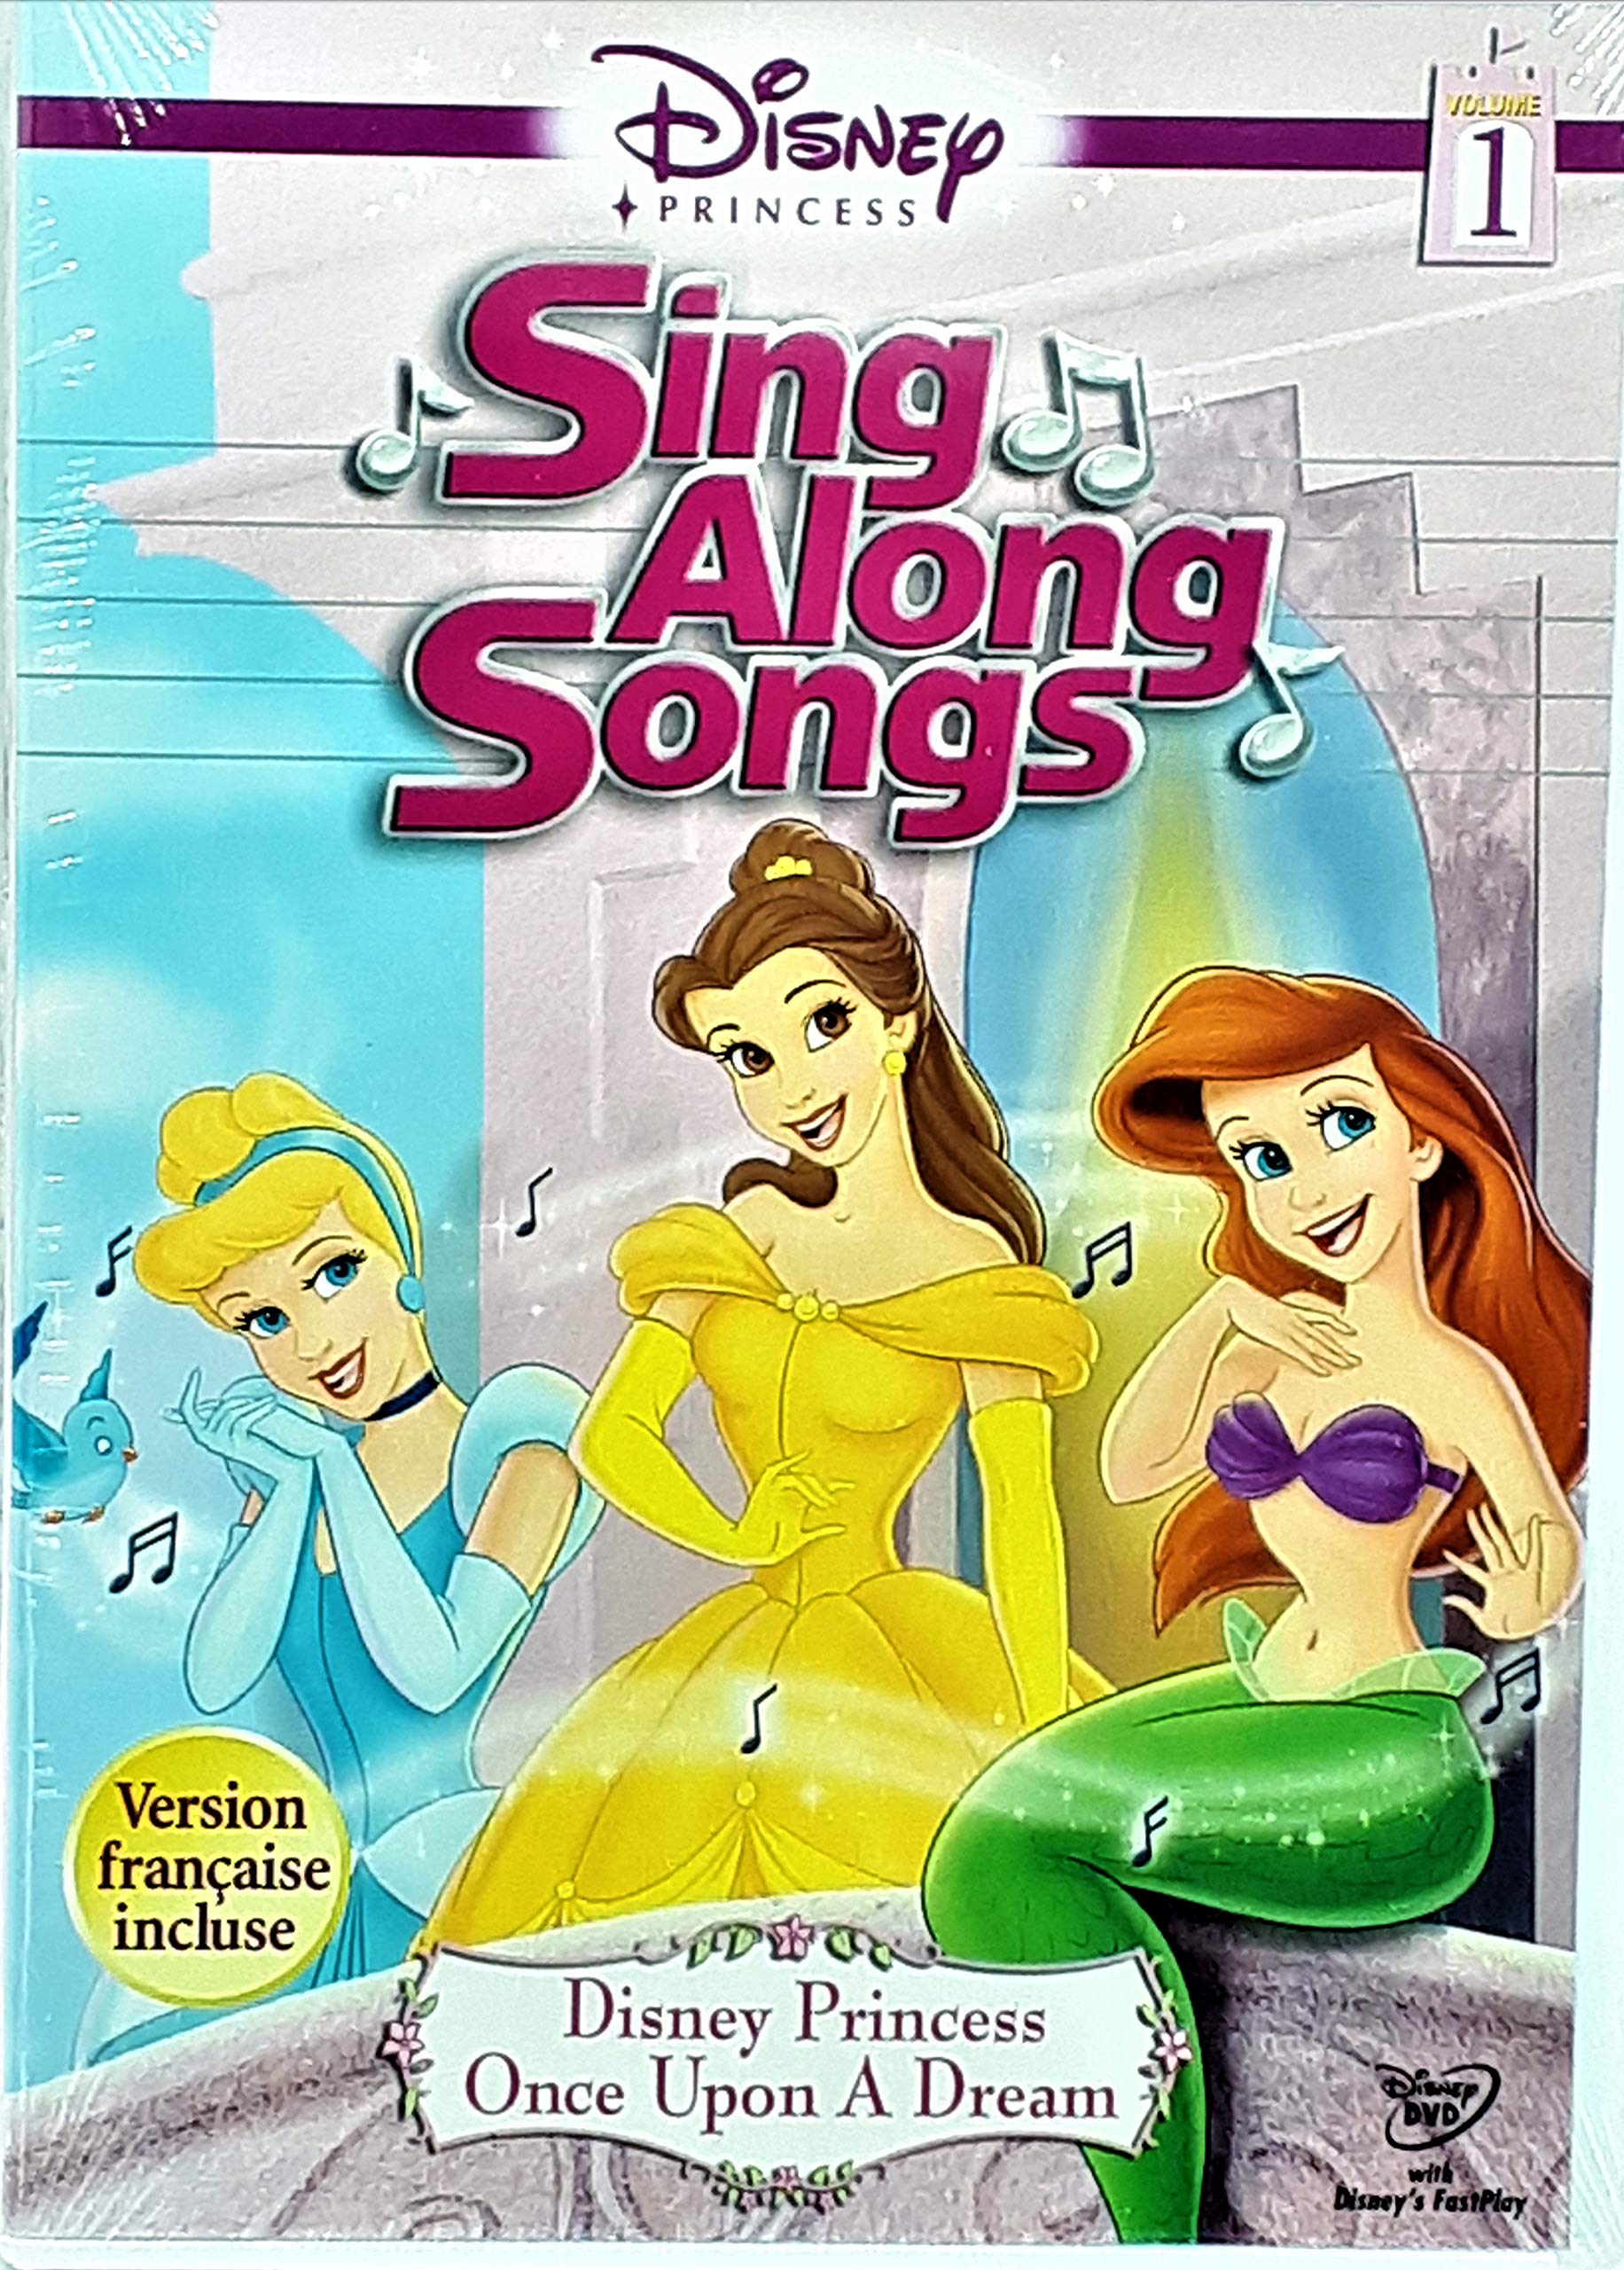 Disney Princess Sing-Along Songs on MovieShack